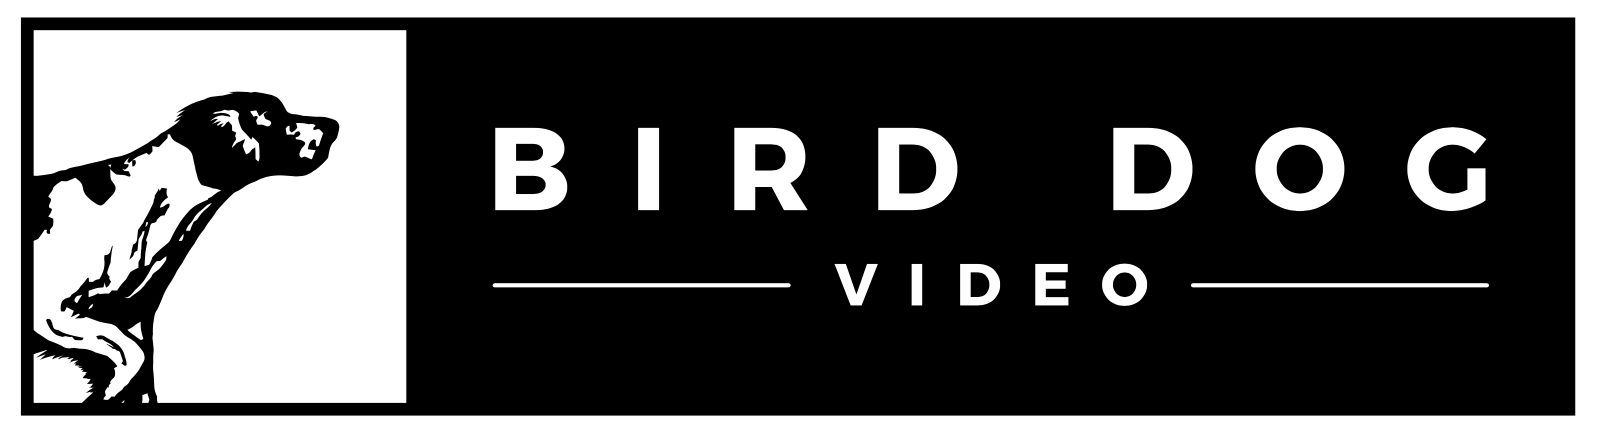 Bird Dog Video